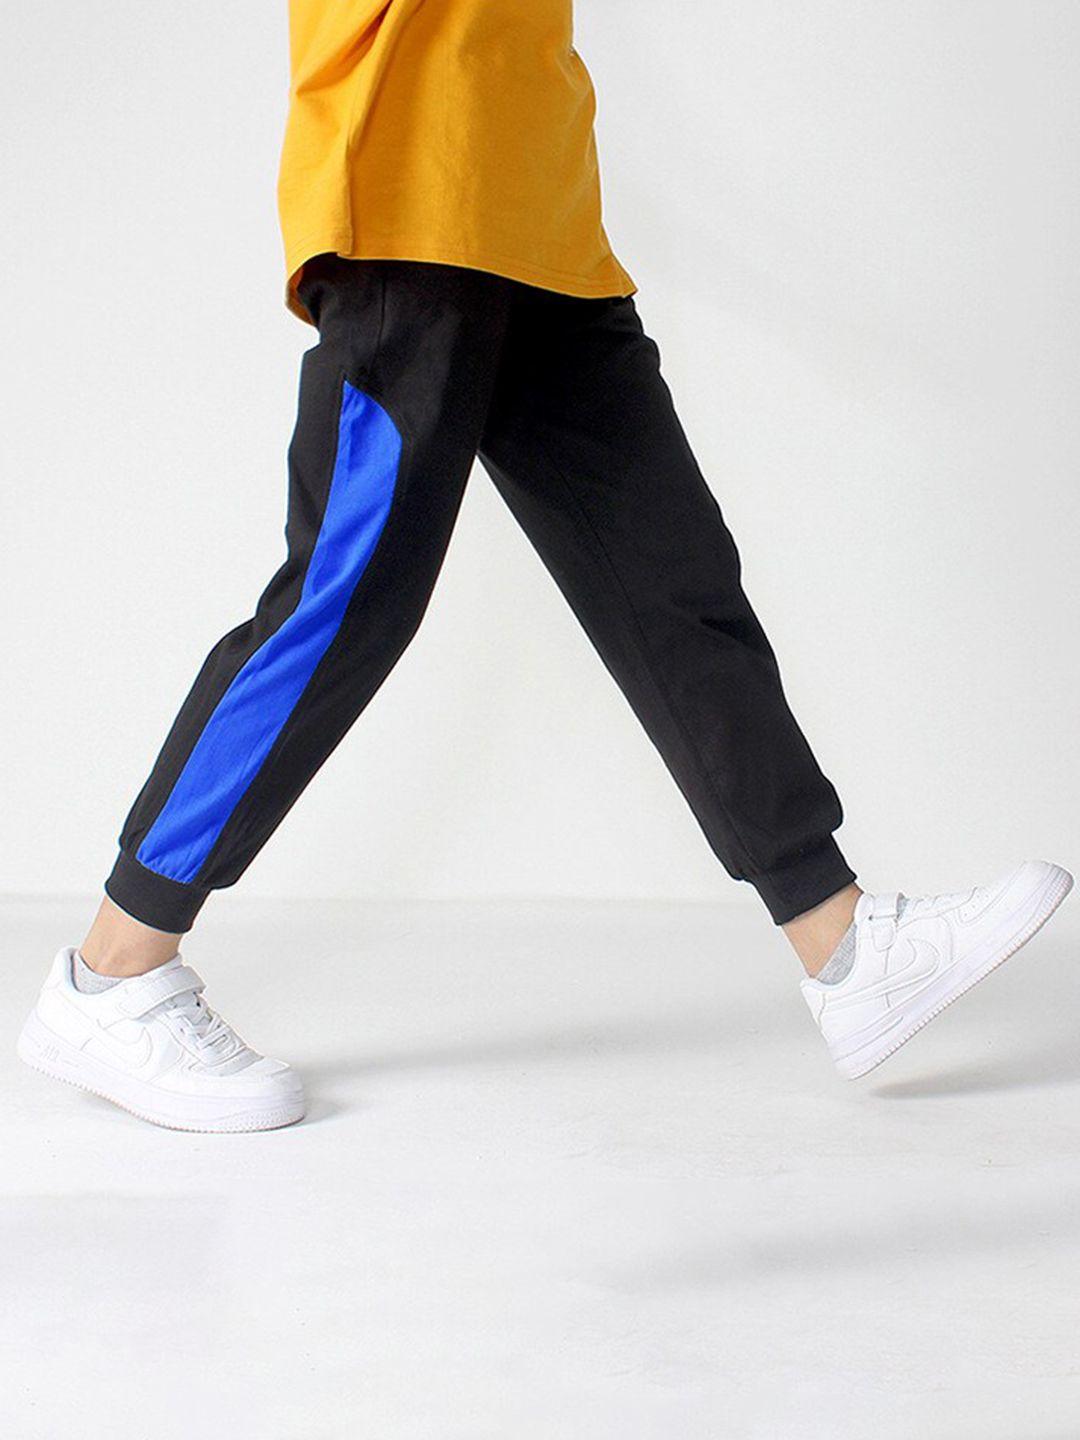 stylecast boys black & blue striped mid-rise cotton joggers trousers